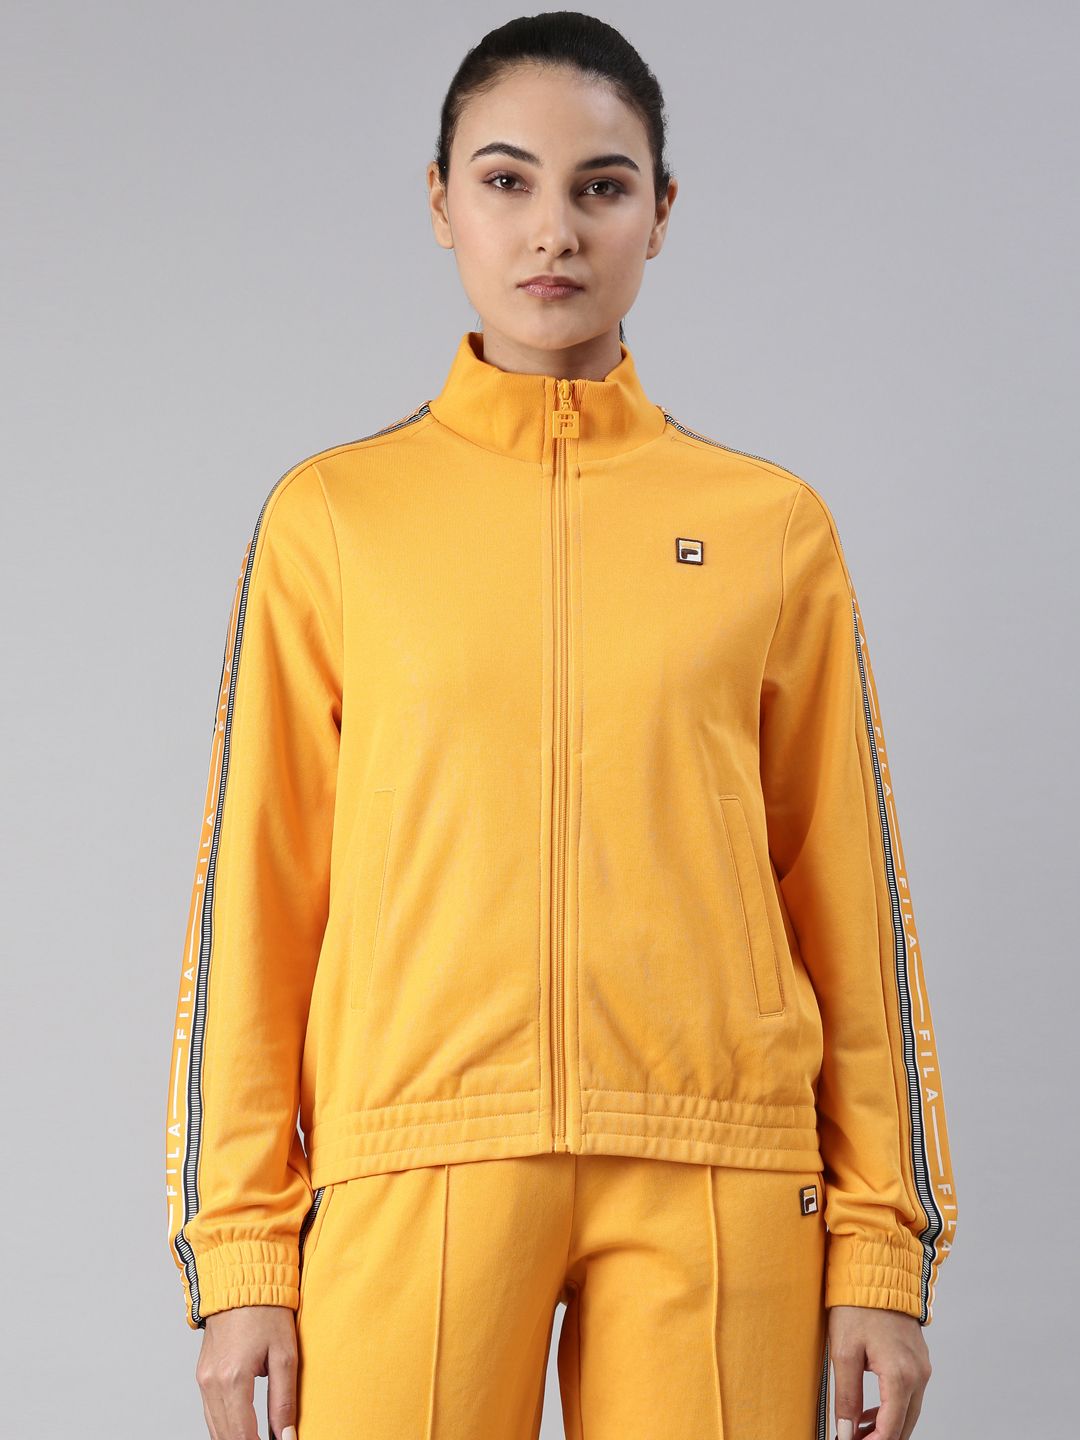 Casual Jackets for Women - Buy Stylish Winterwear Jackets | ONLY